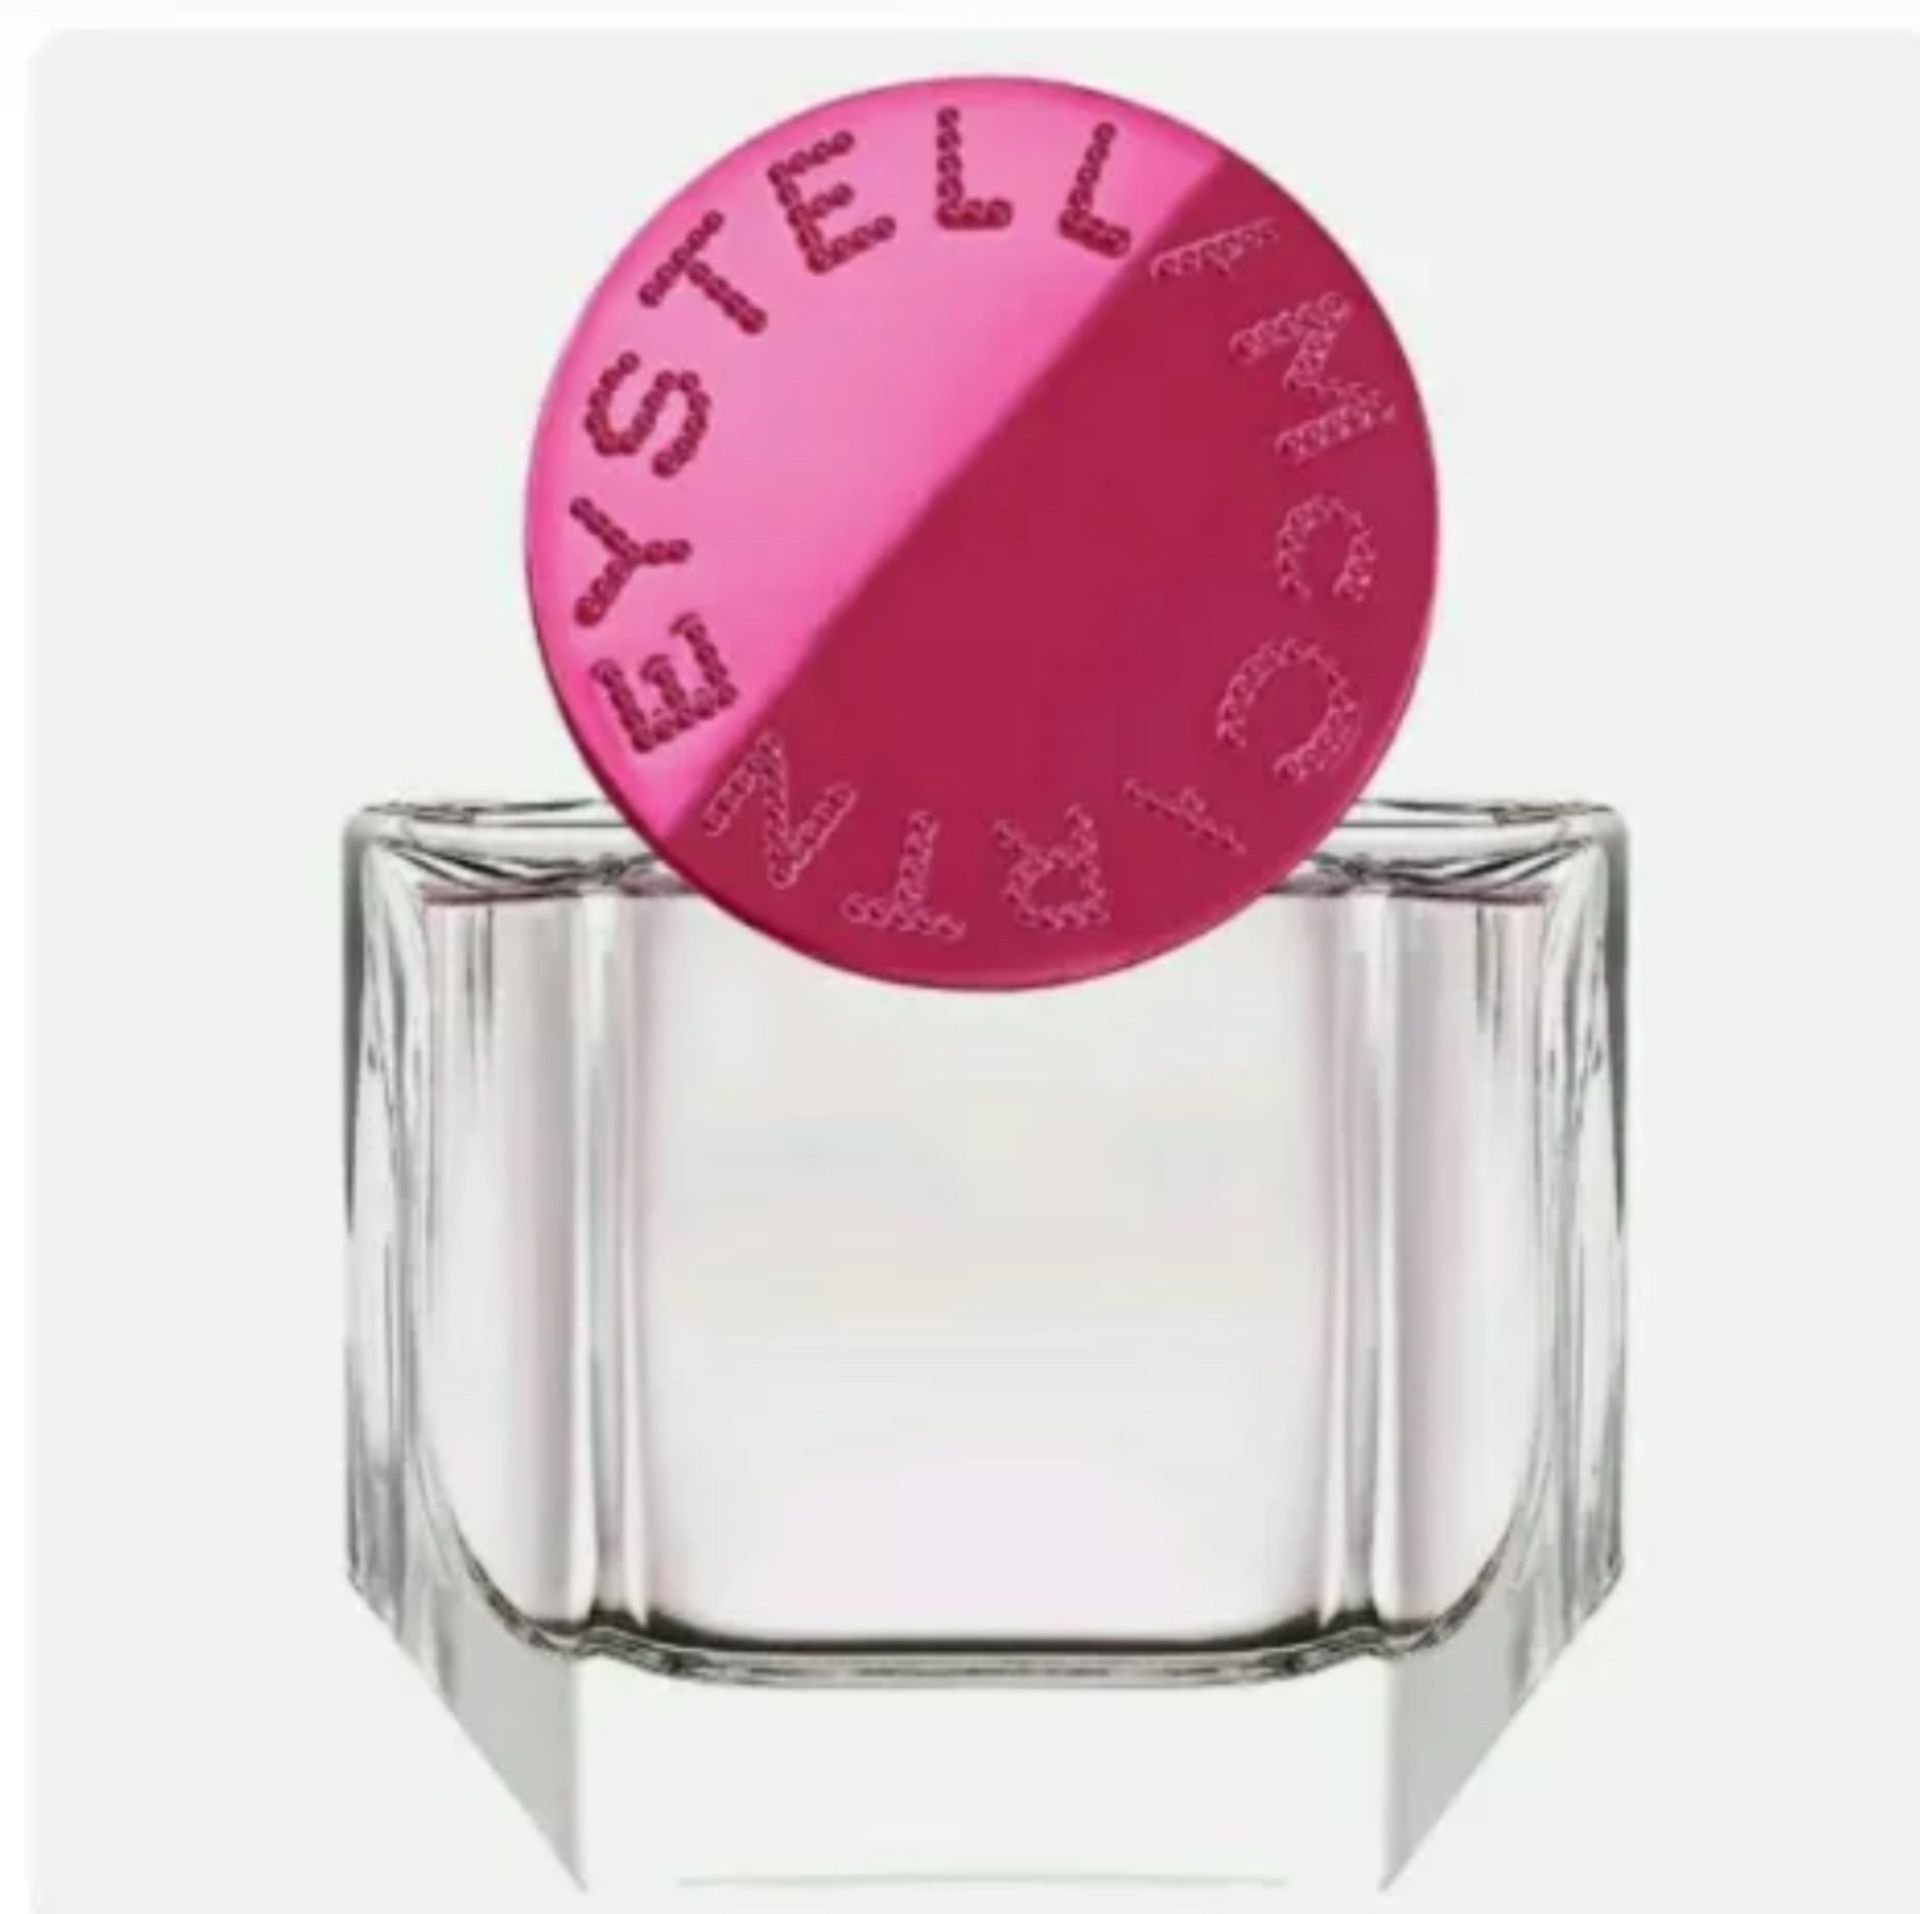 New Stella McCartney POP perfume 30ml - Image 2 of 2